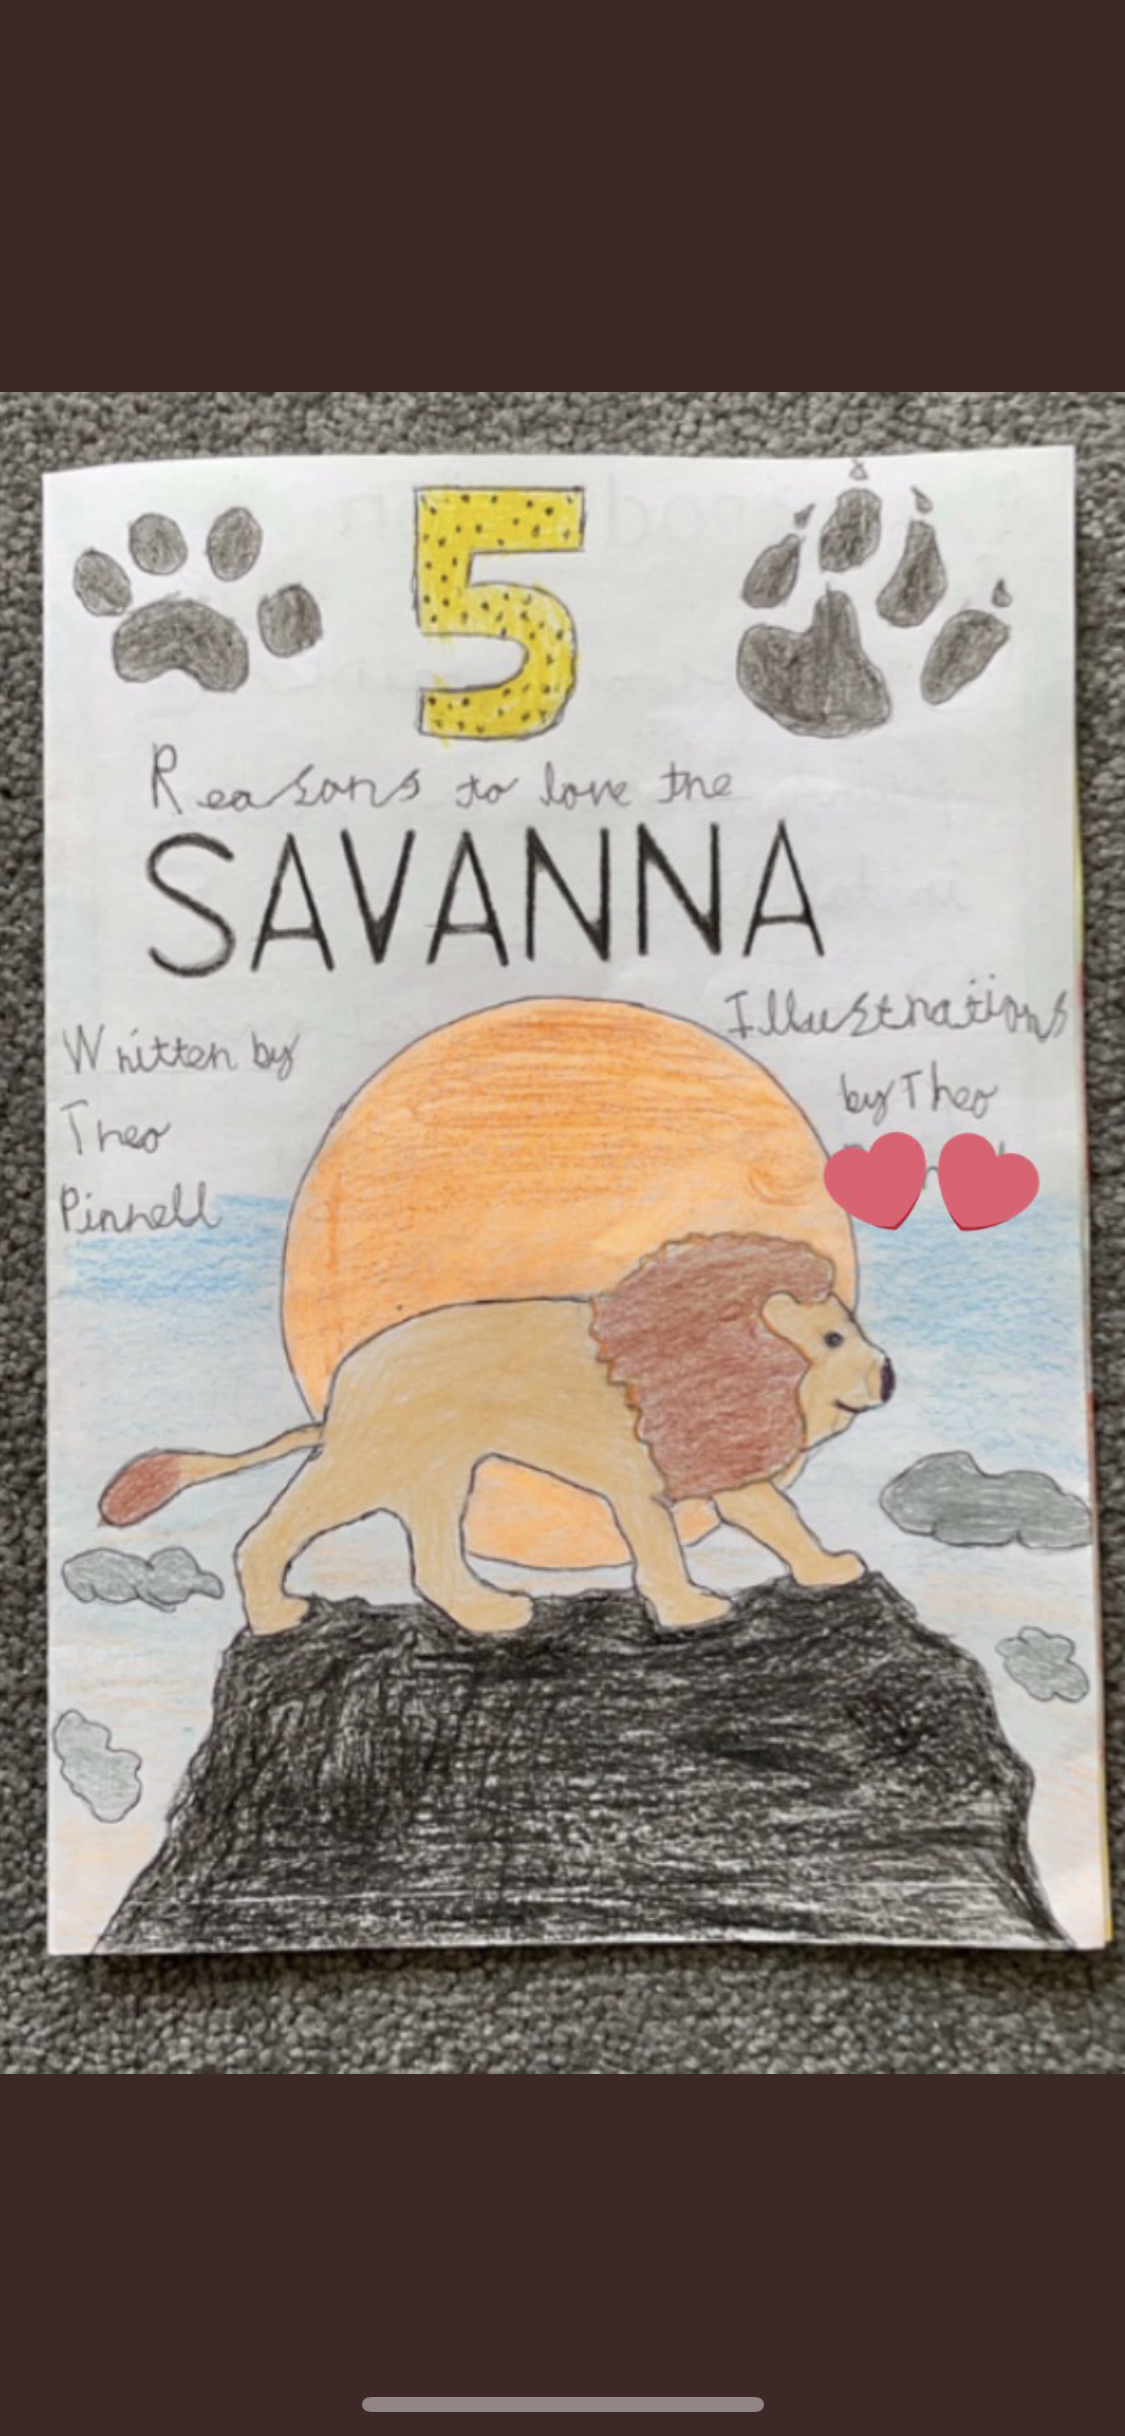 5 Reasons to Love the Savannah